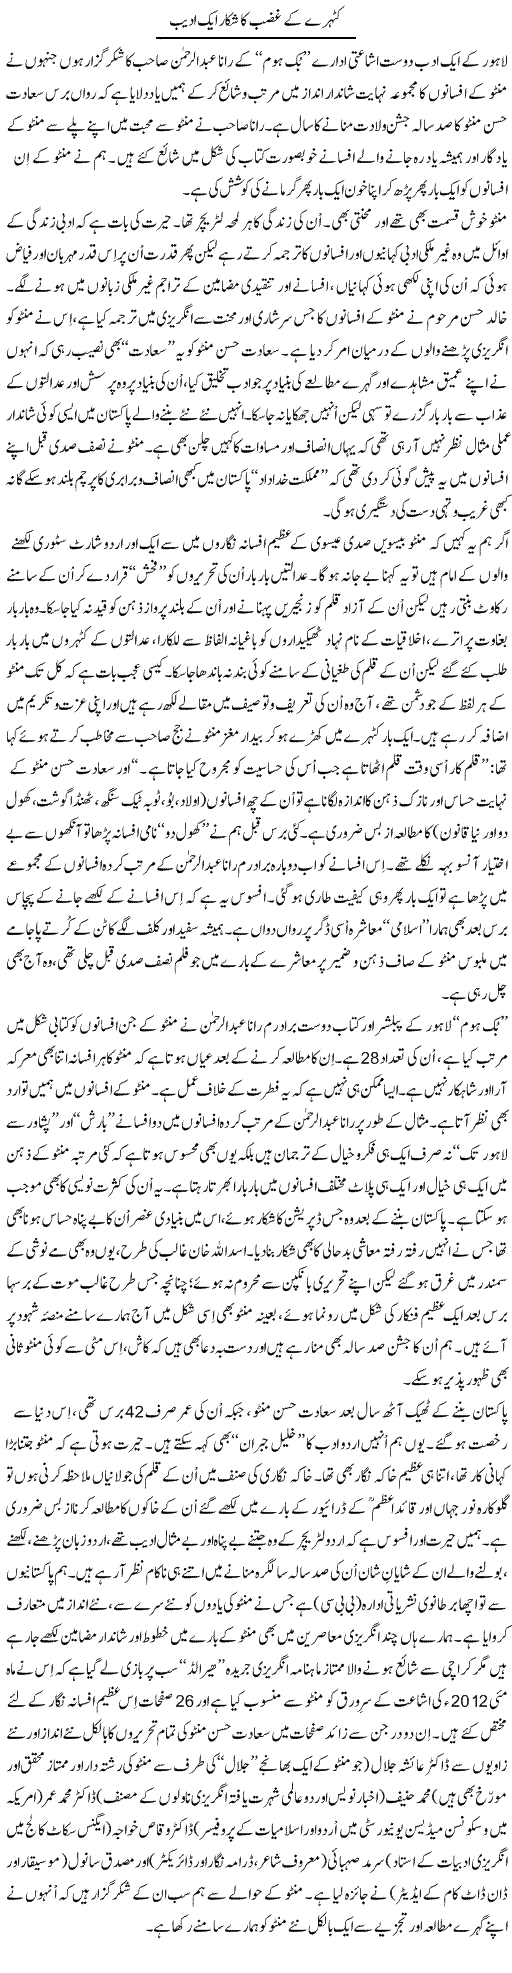 Saadat Hasan Manto Express Column Tanvir Qasir 21 May 2012